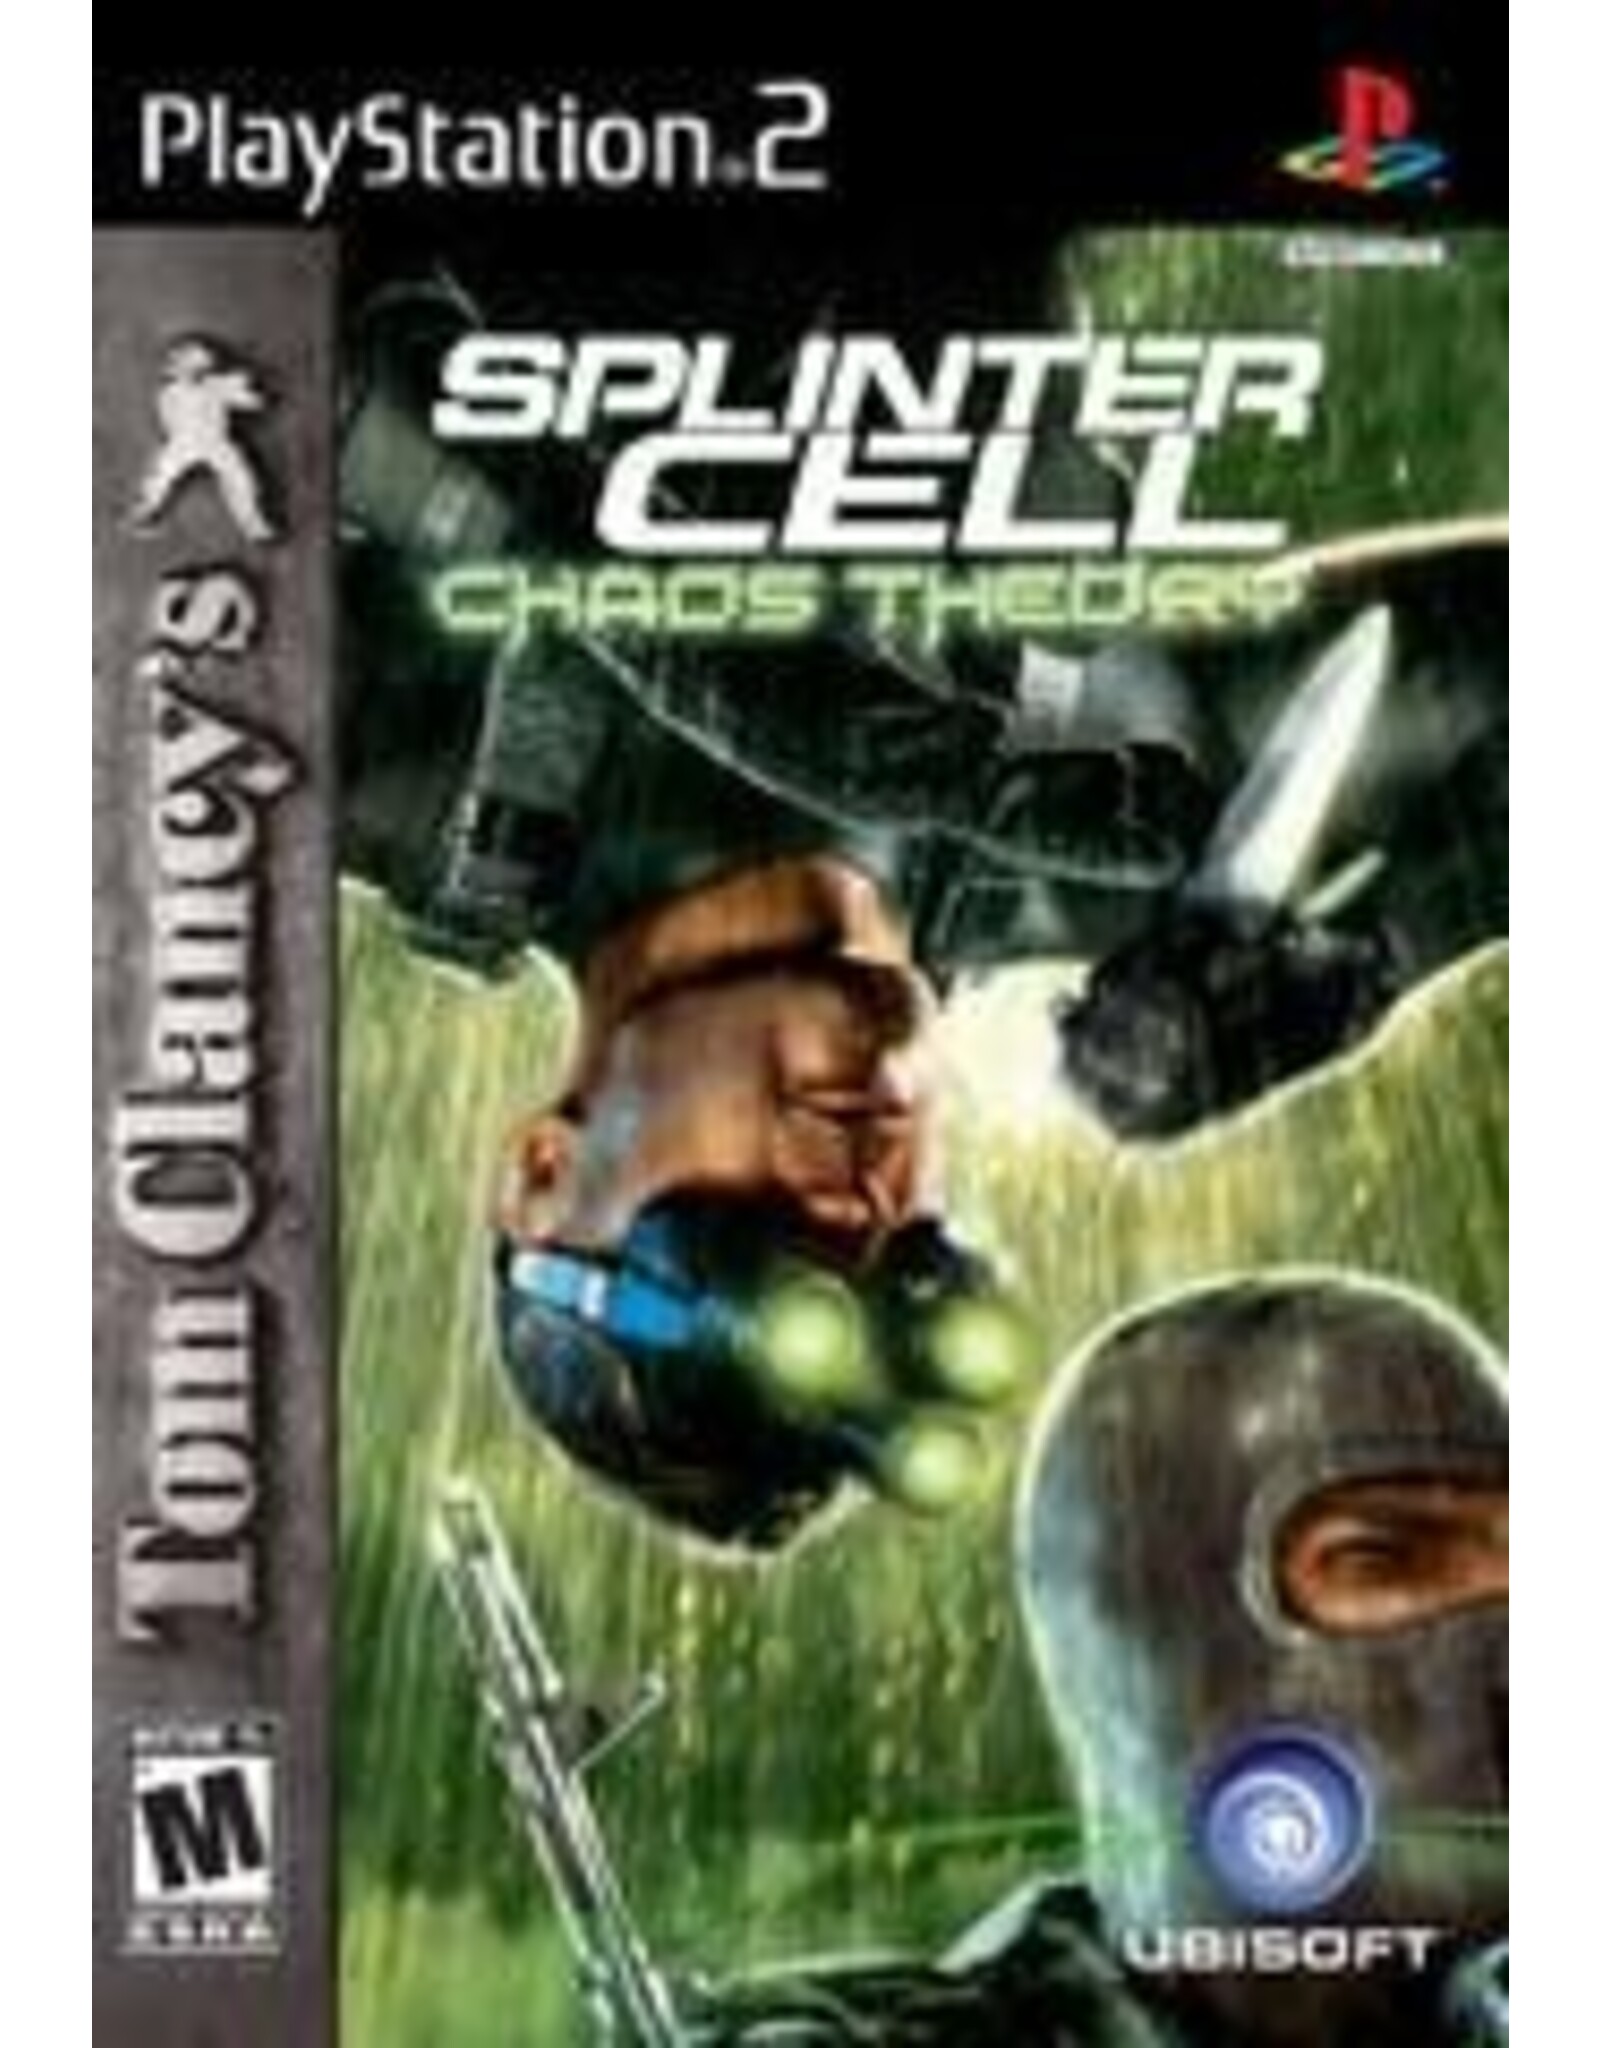 Playstation 2 Splinter Cell Chaos Theory (CiB)